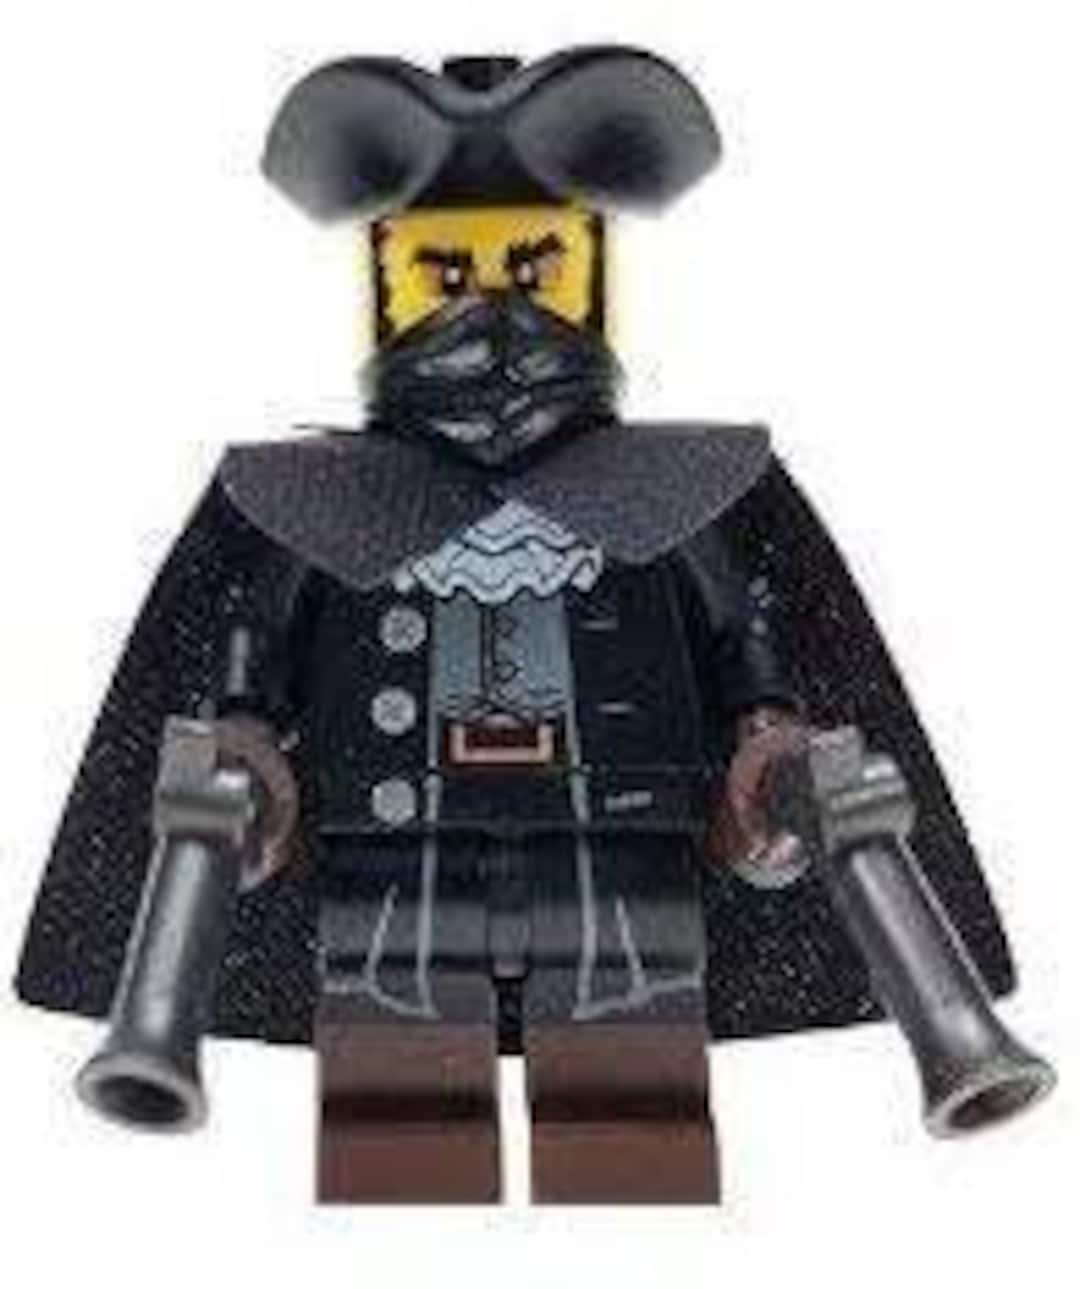 de kontrol Rodeo Lego 71018 Series 17 Victorian Assassin Guy 16 Minifigure CMF - Etsy